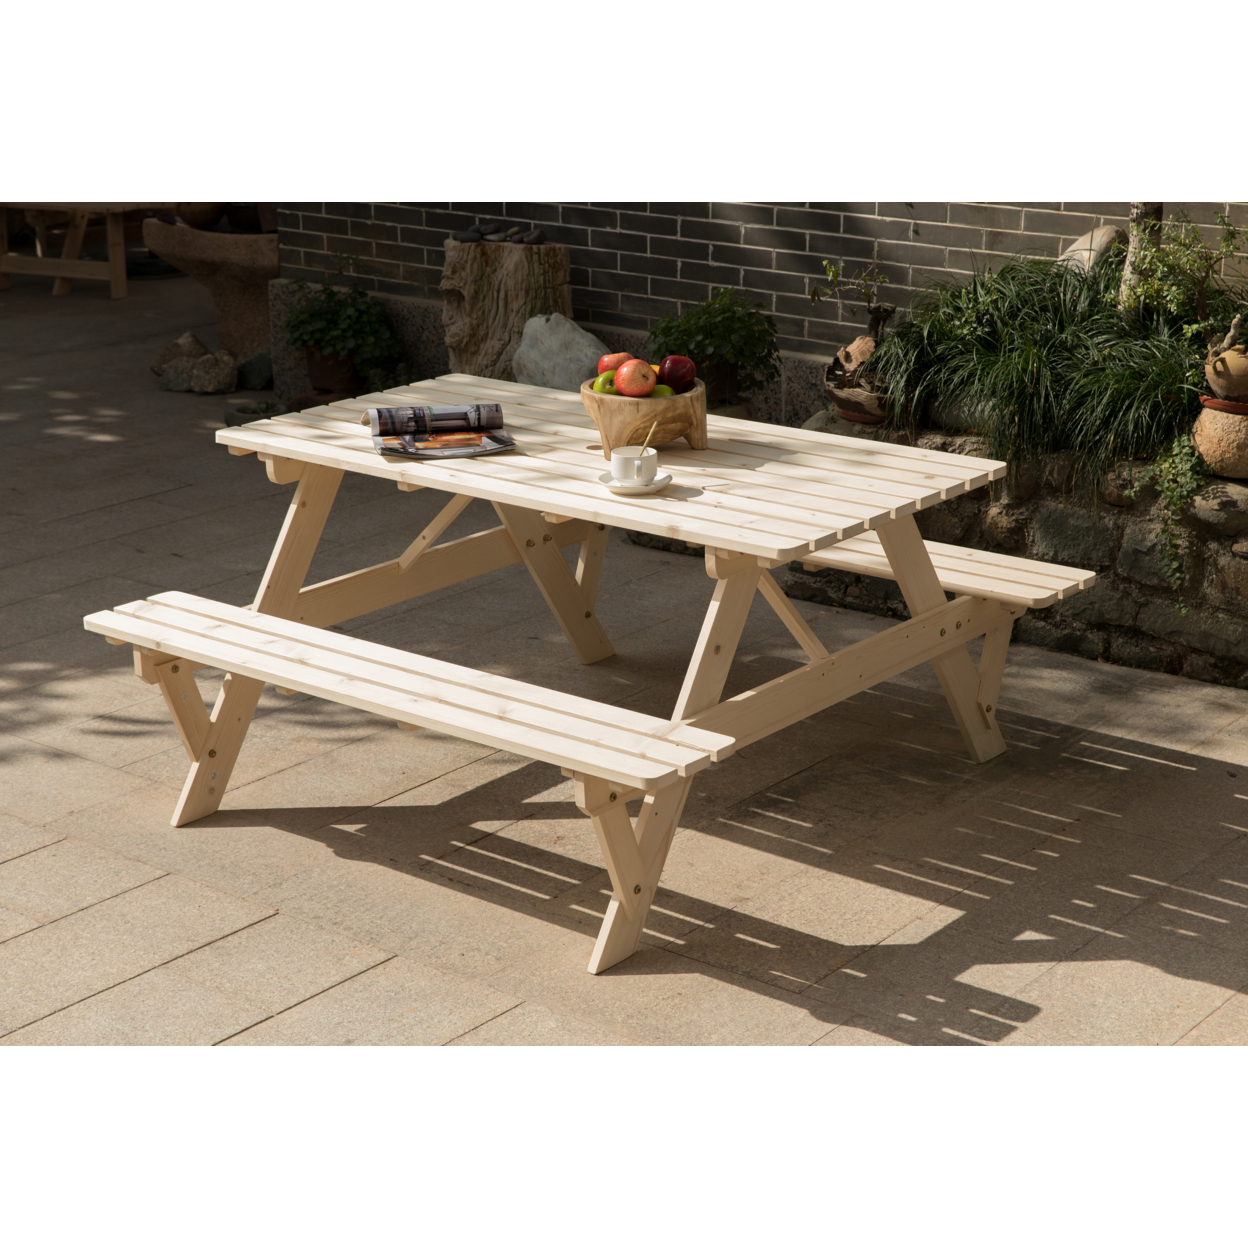 Outdoor Wooden Patio Deck Garden 6-Person Picnic Table, For Backyard, Garden - Stained